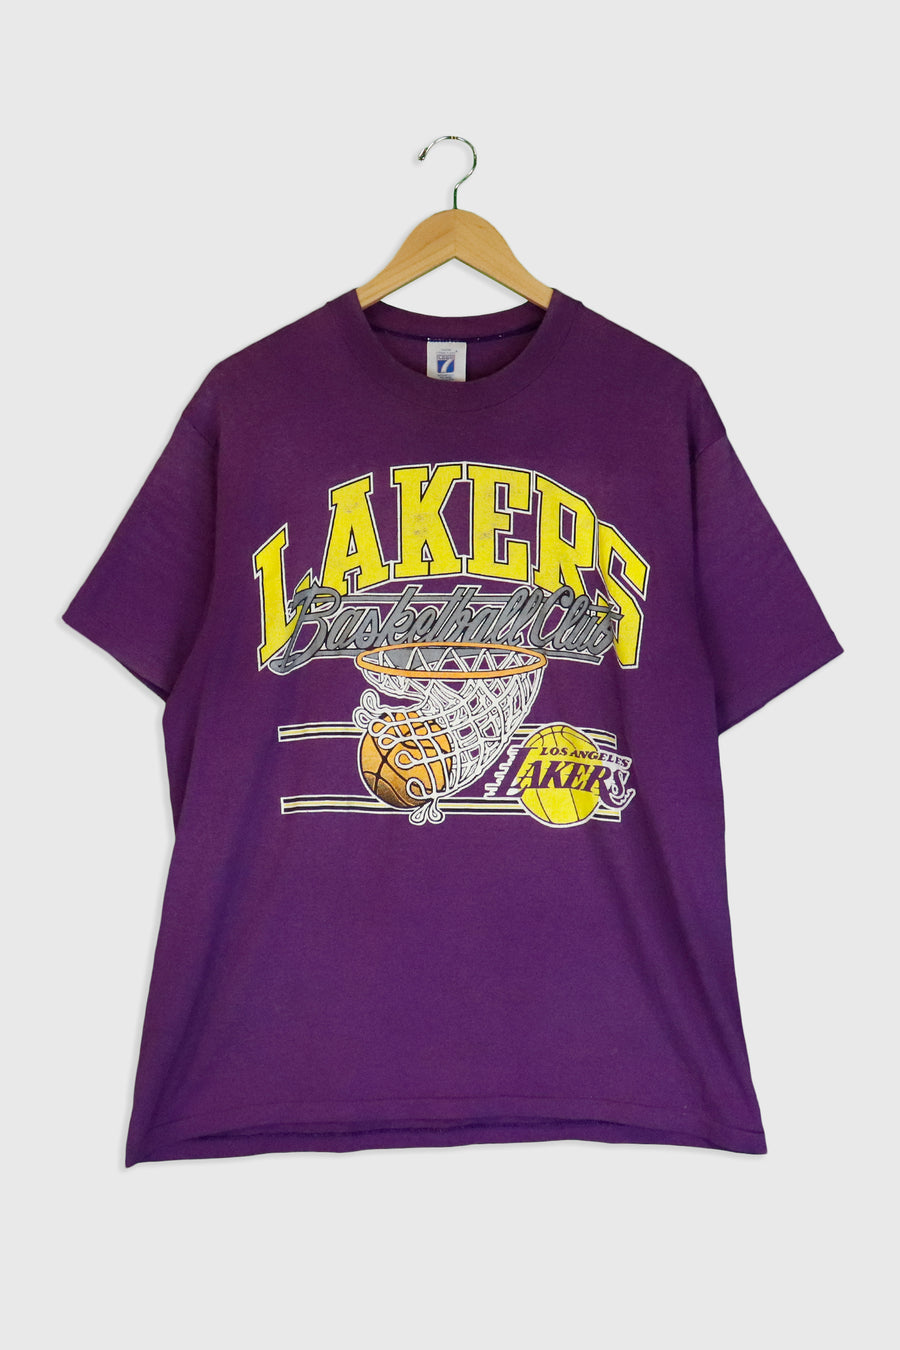 Vintage Logo 7 La Lakers Basketball Club T Shirt Sz XL